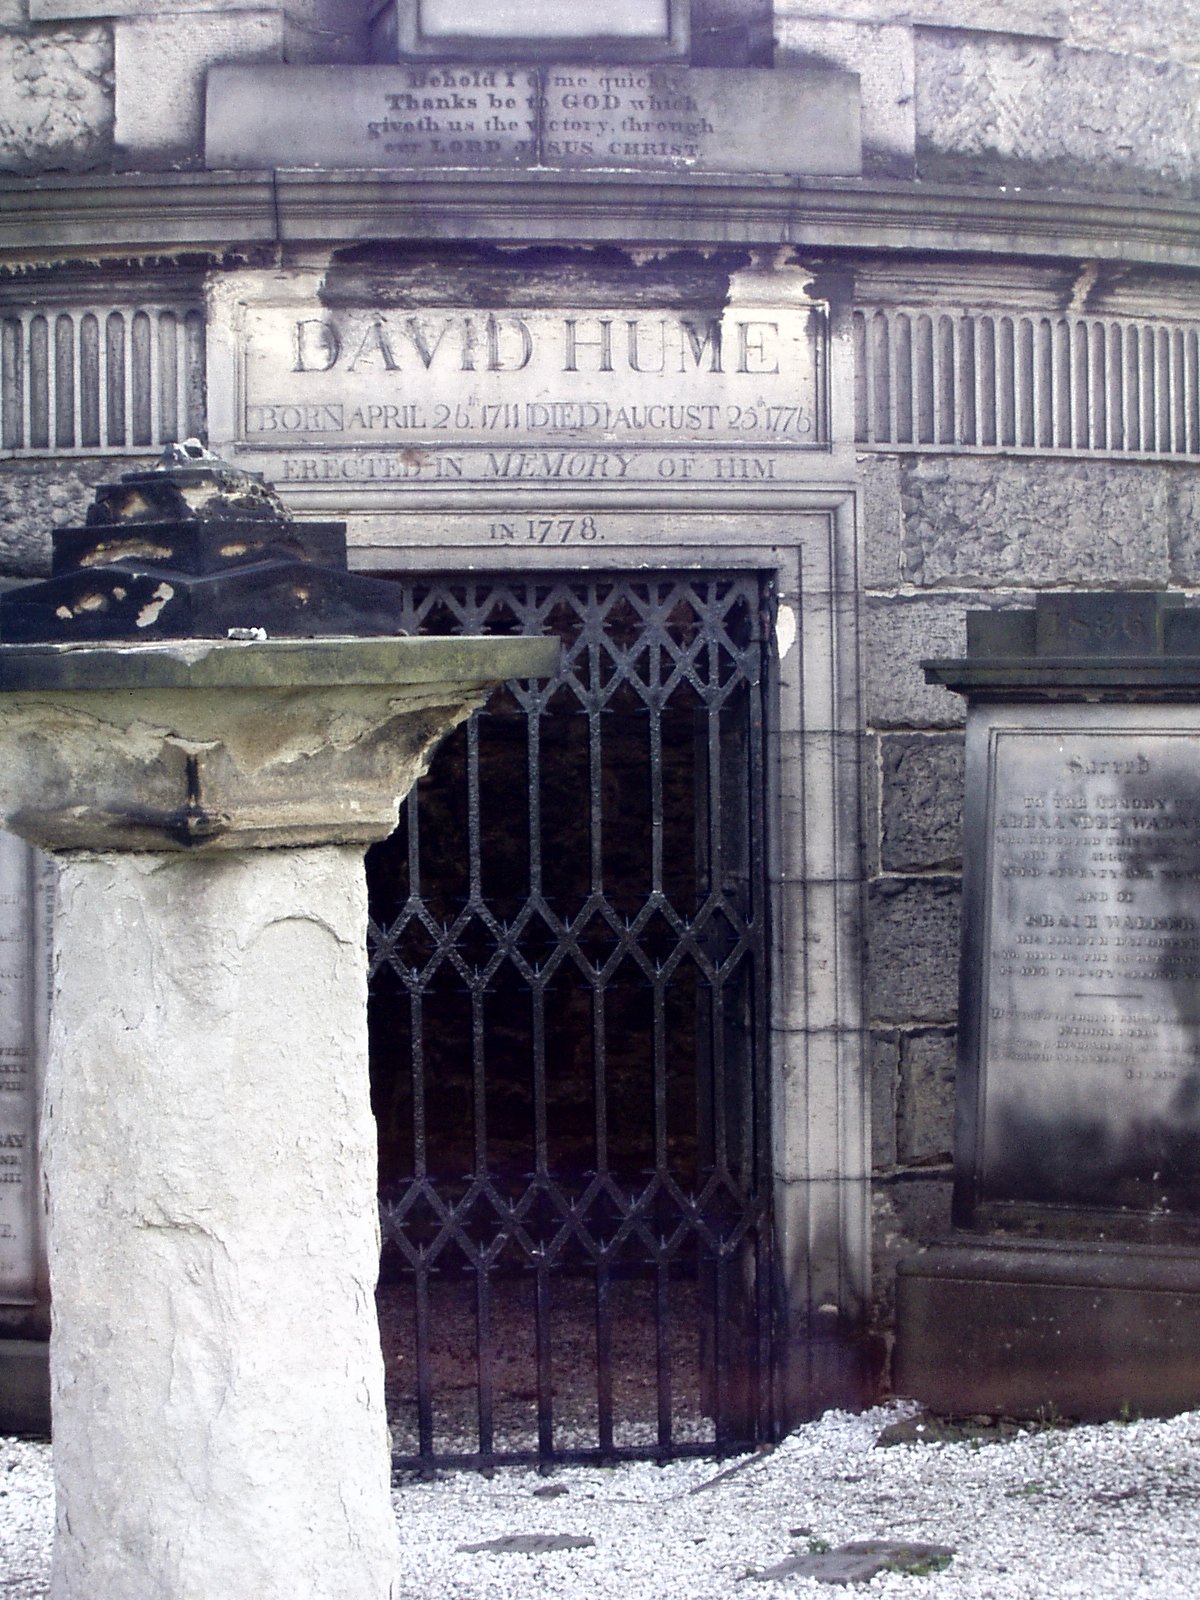 David Hume's grave